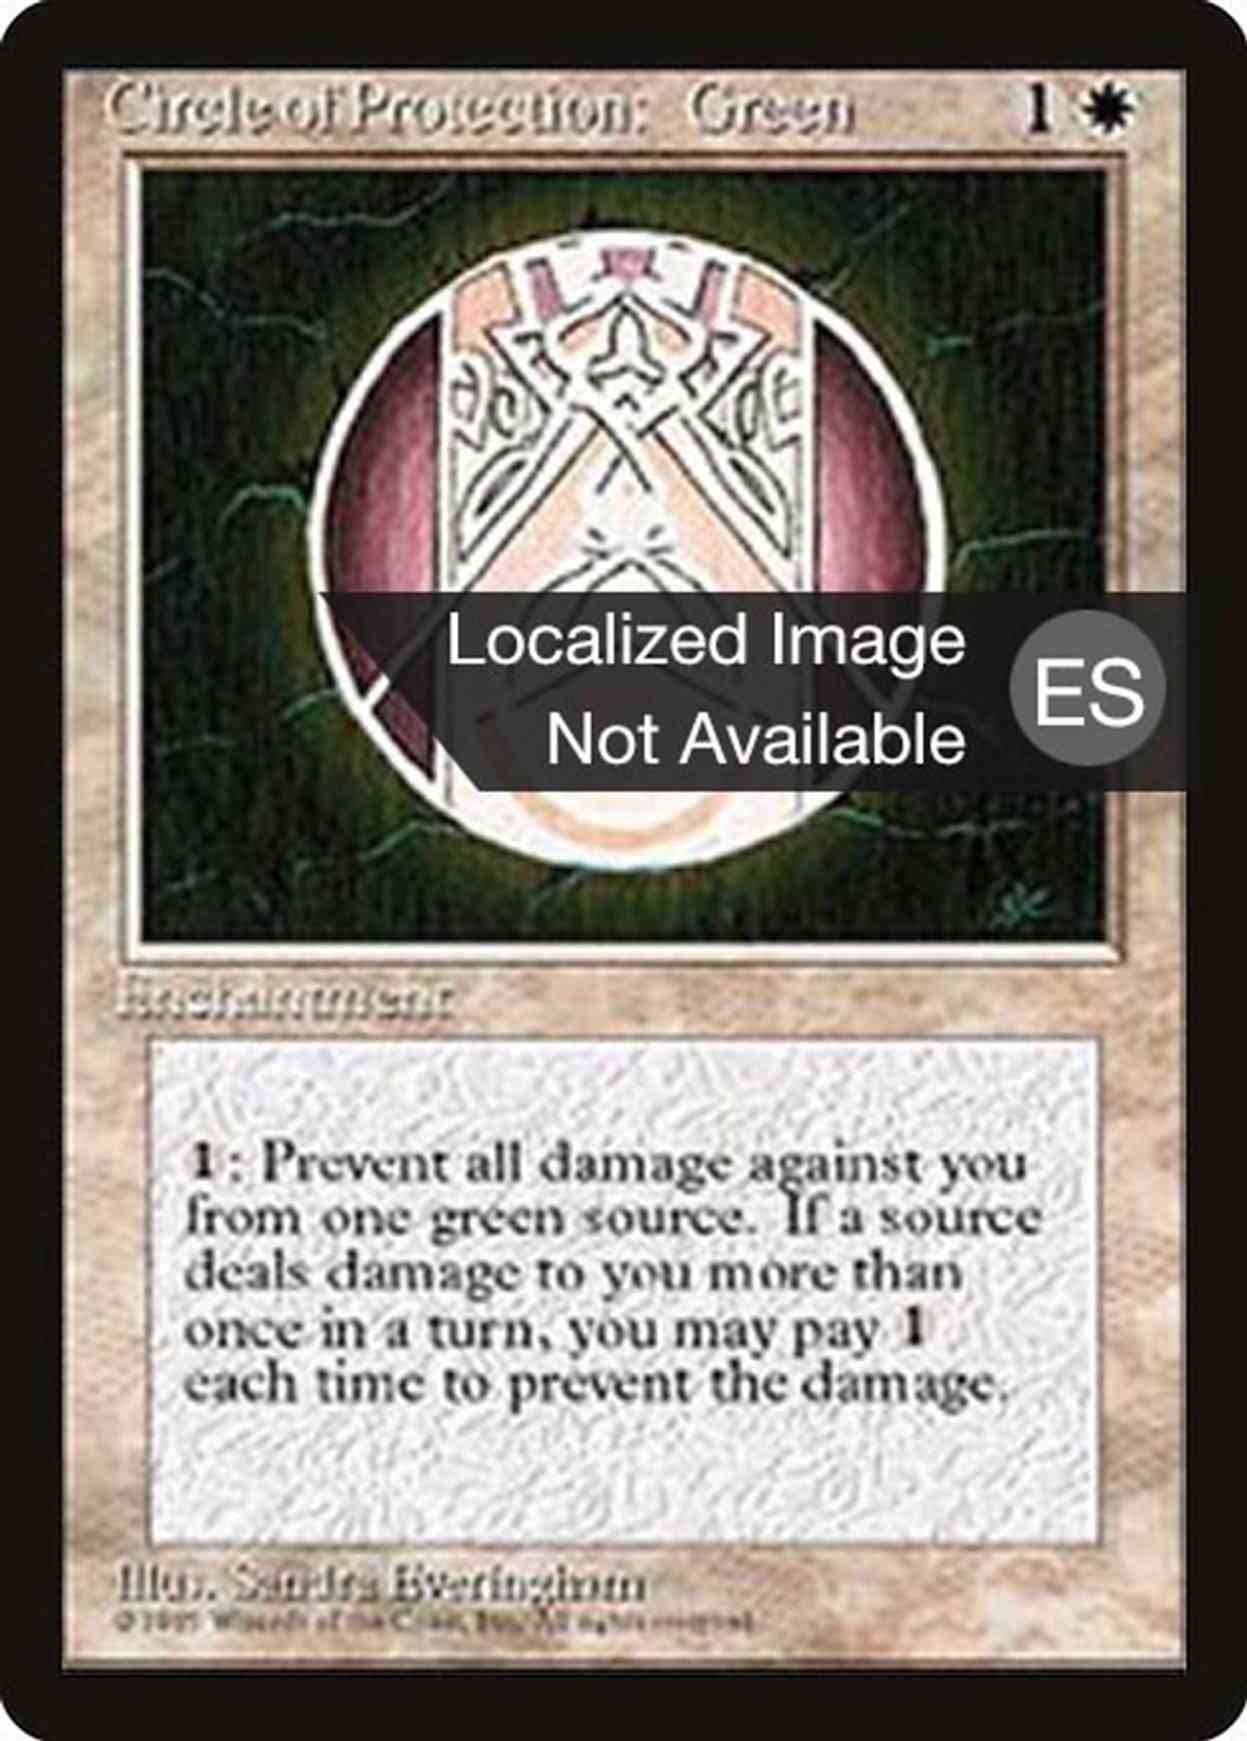 Circle of Protection: Green magic card front